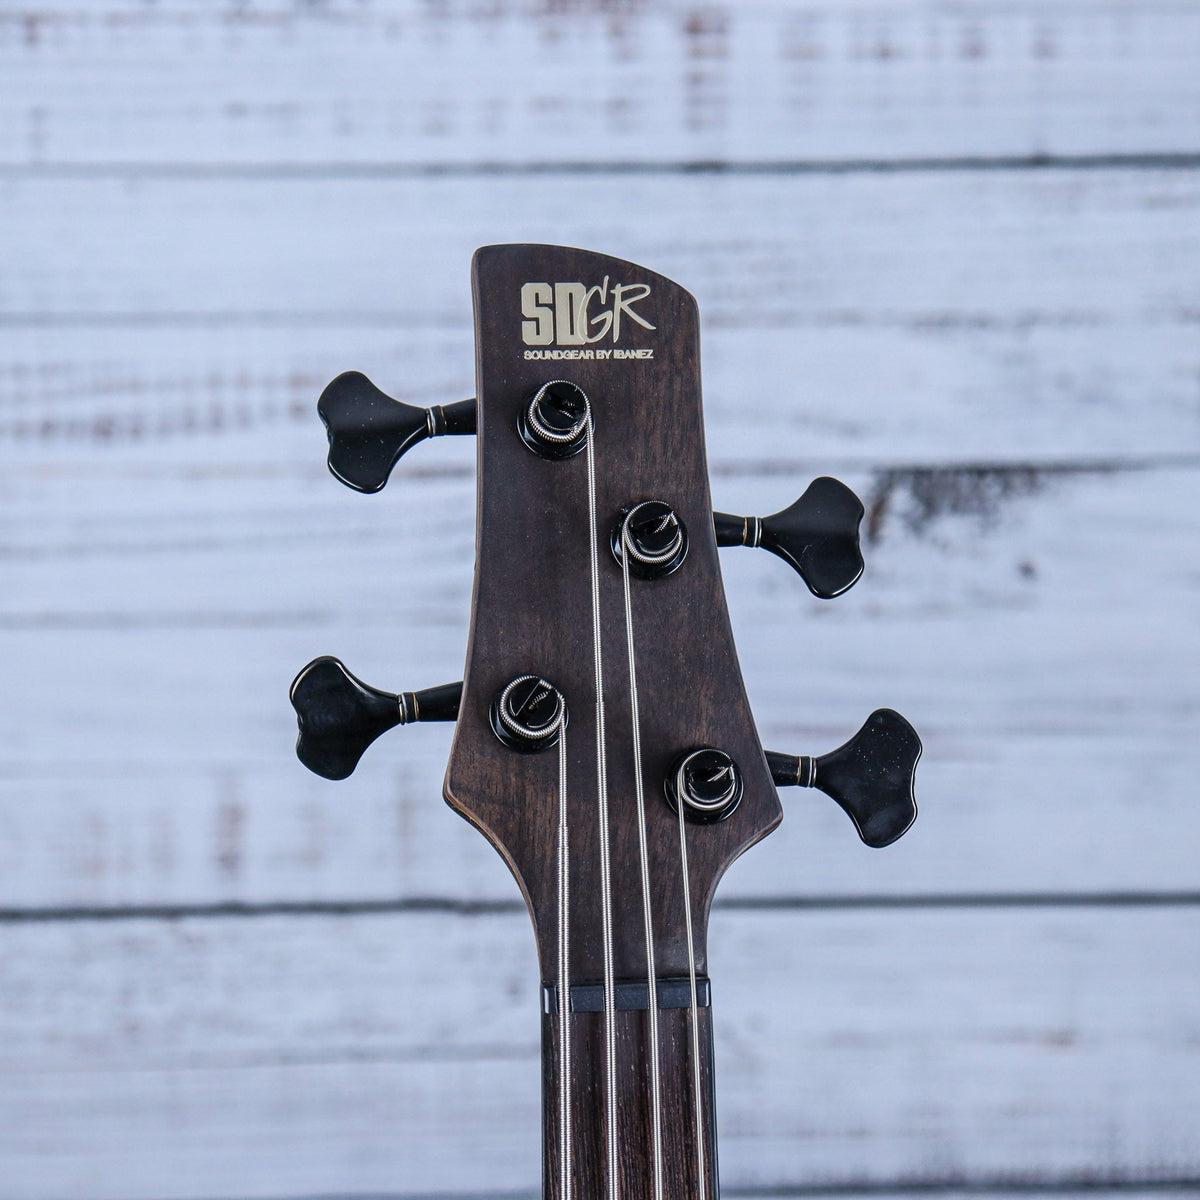 Ibanez SR1350BDUF Premium Bass Guitar | Dual Mocha Burst Flat